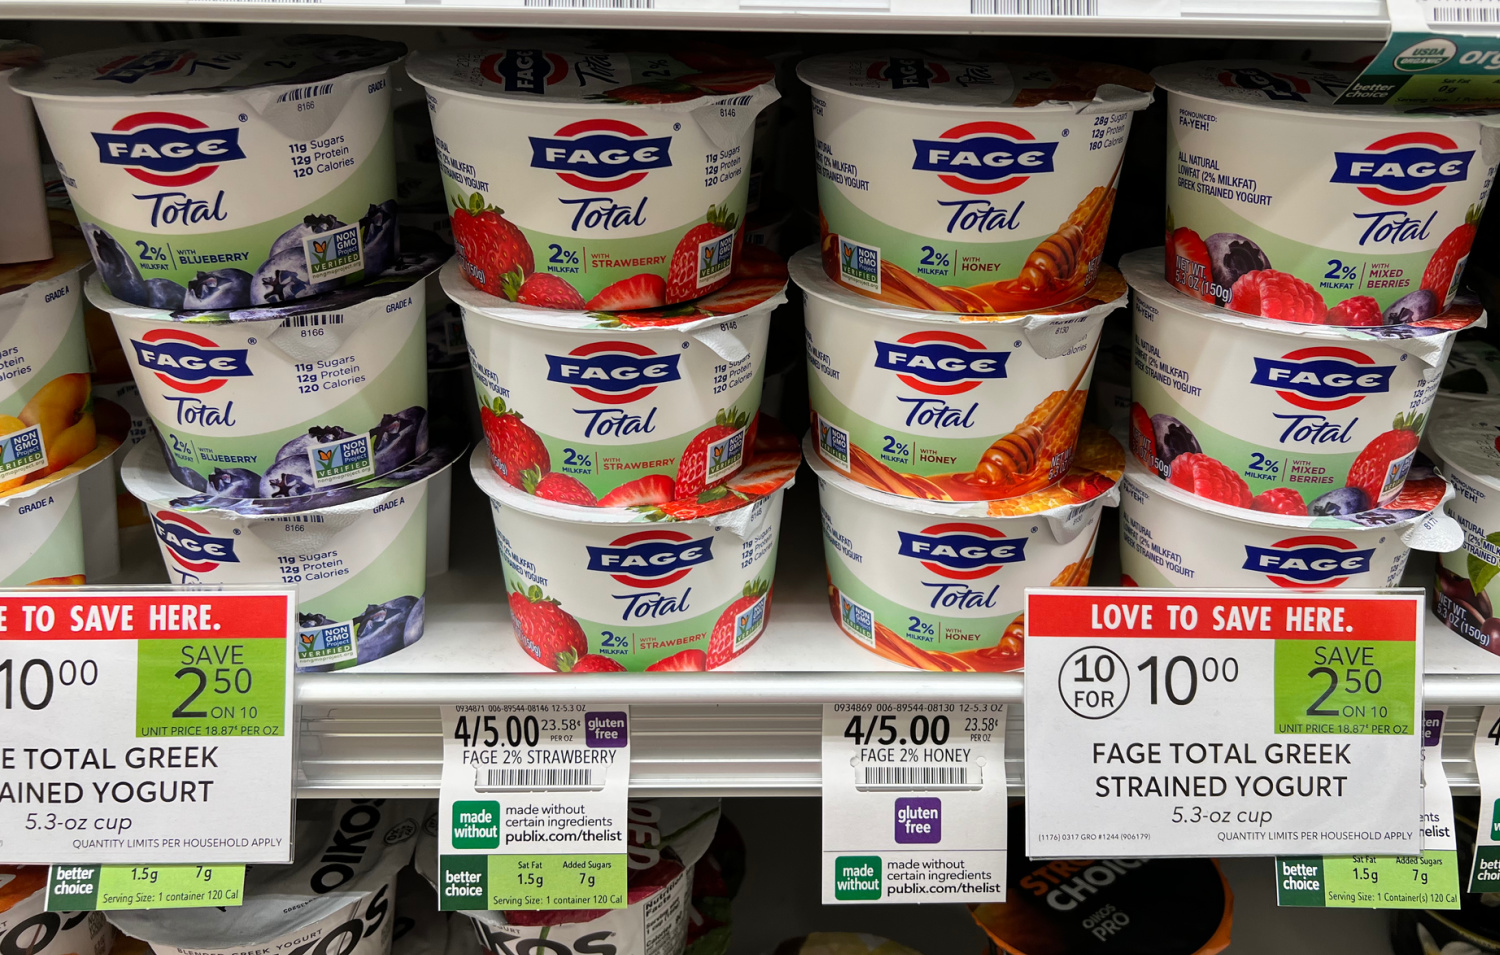 Fage Total Yogurt Just 50¢ At Publix on I Heart Publix 1